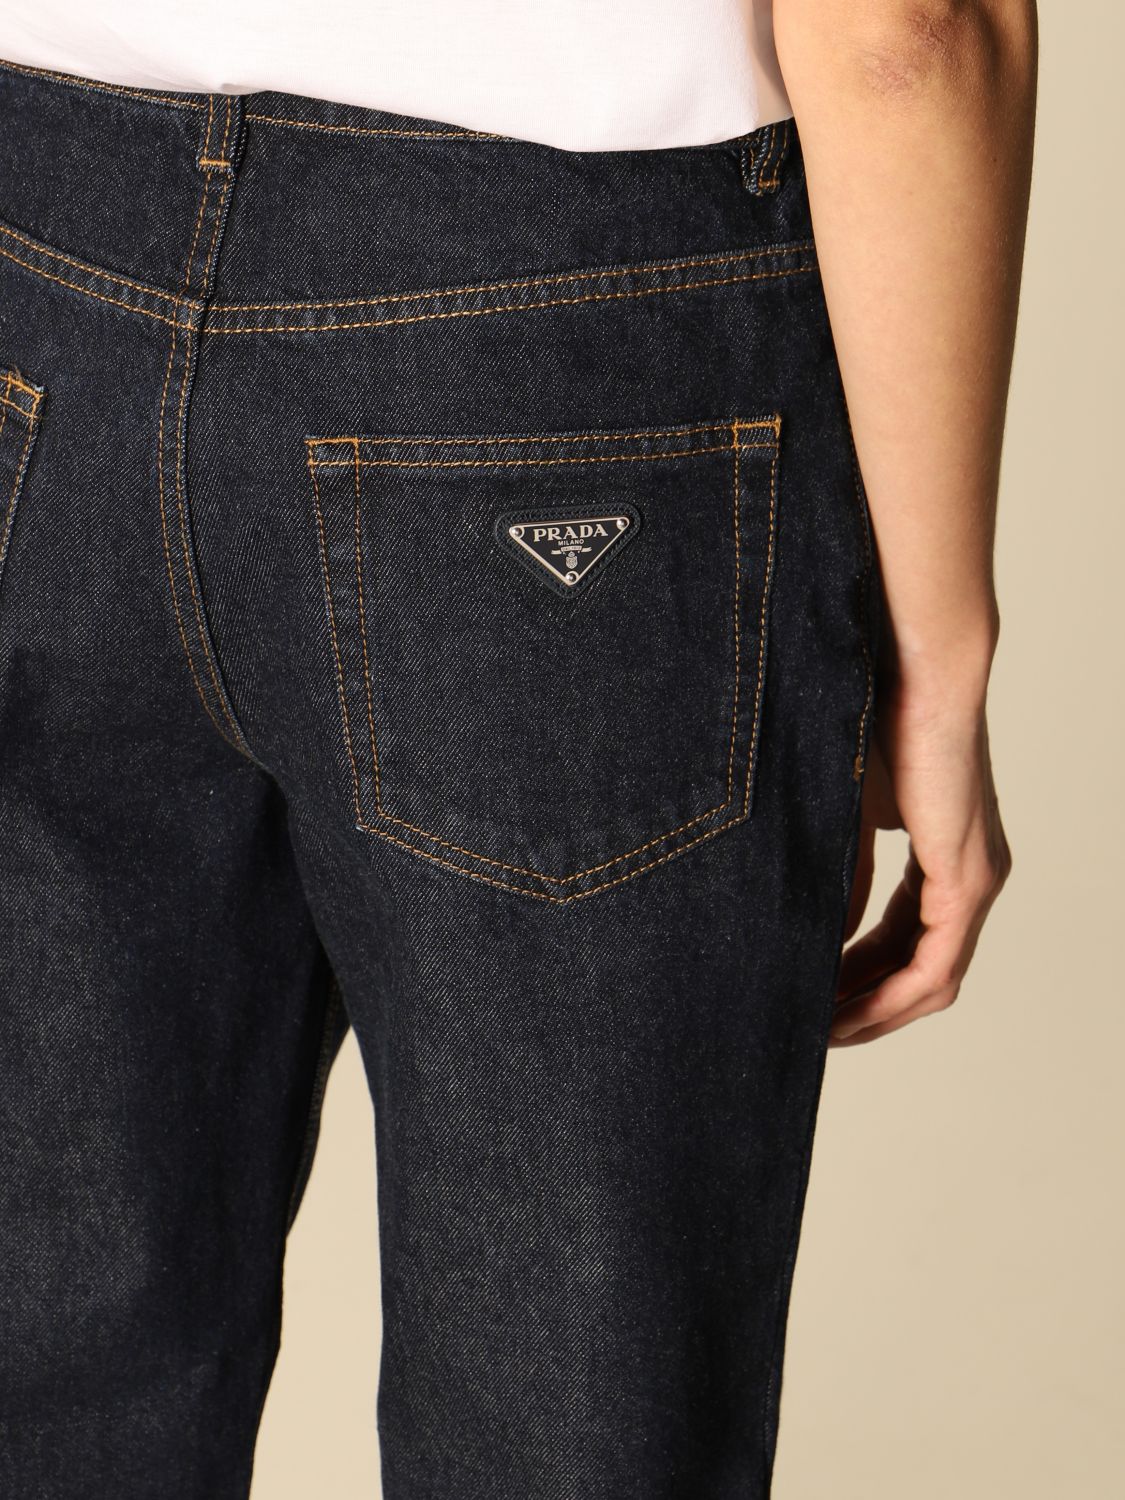 prada jeans logo